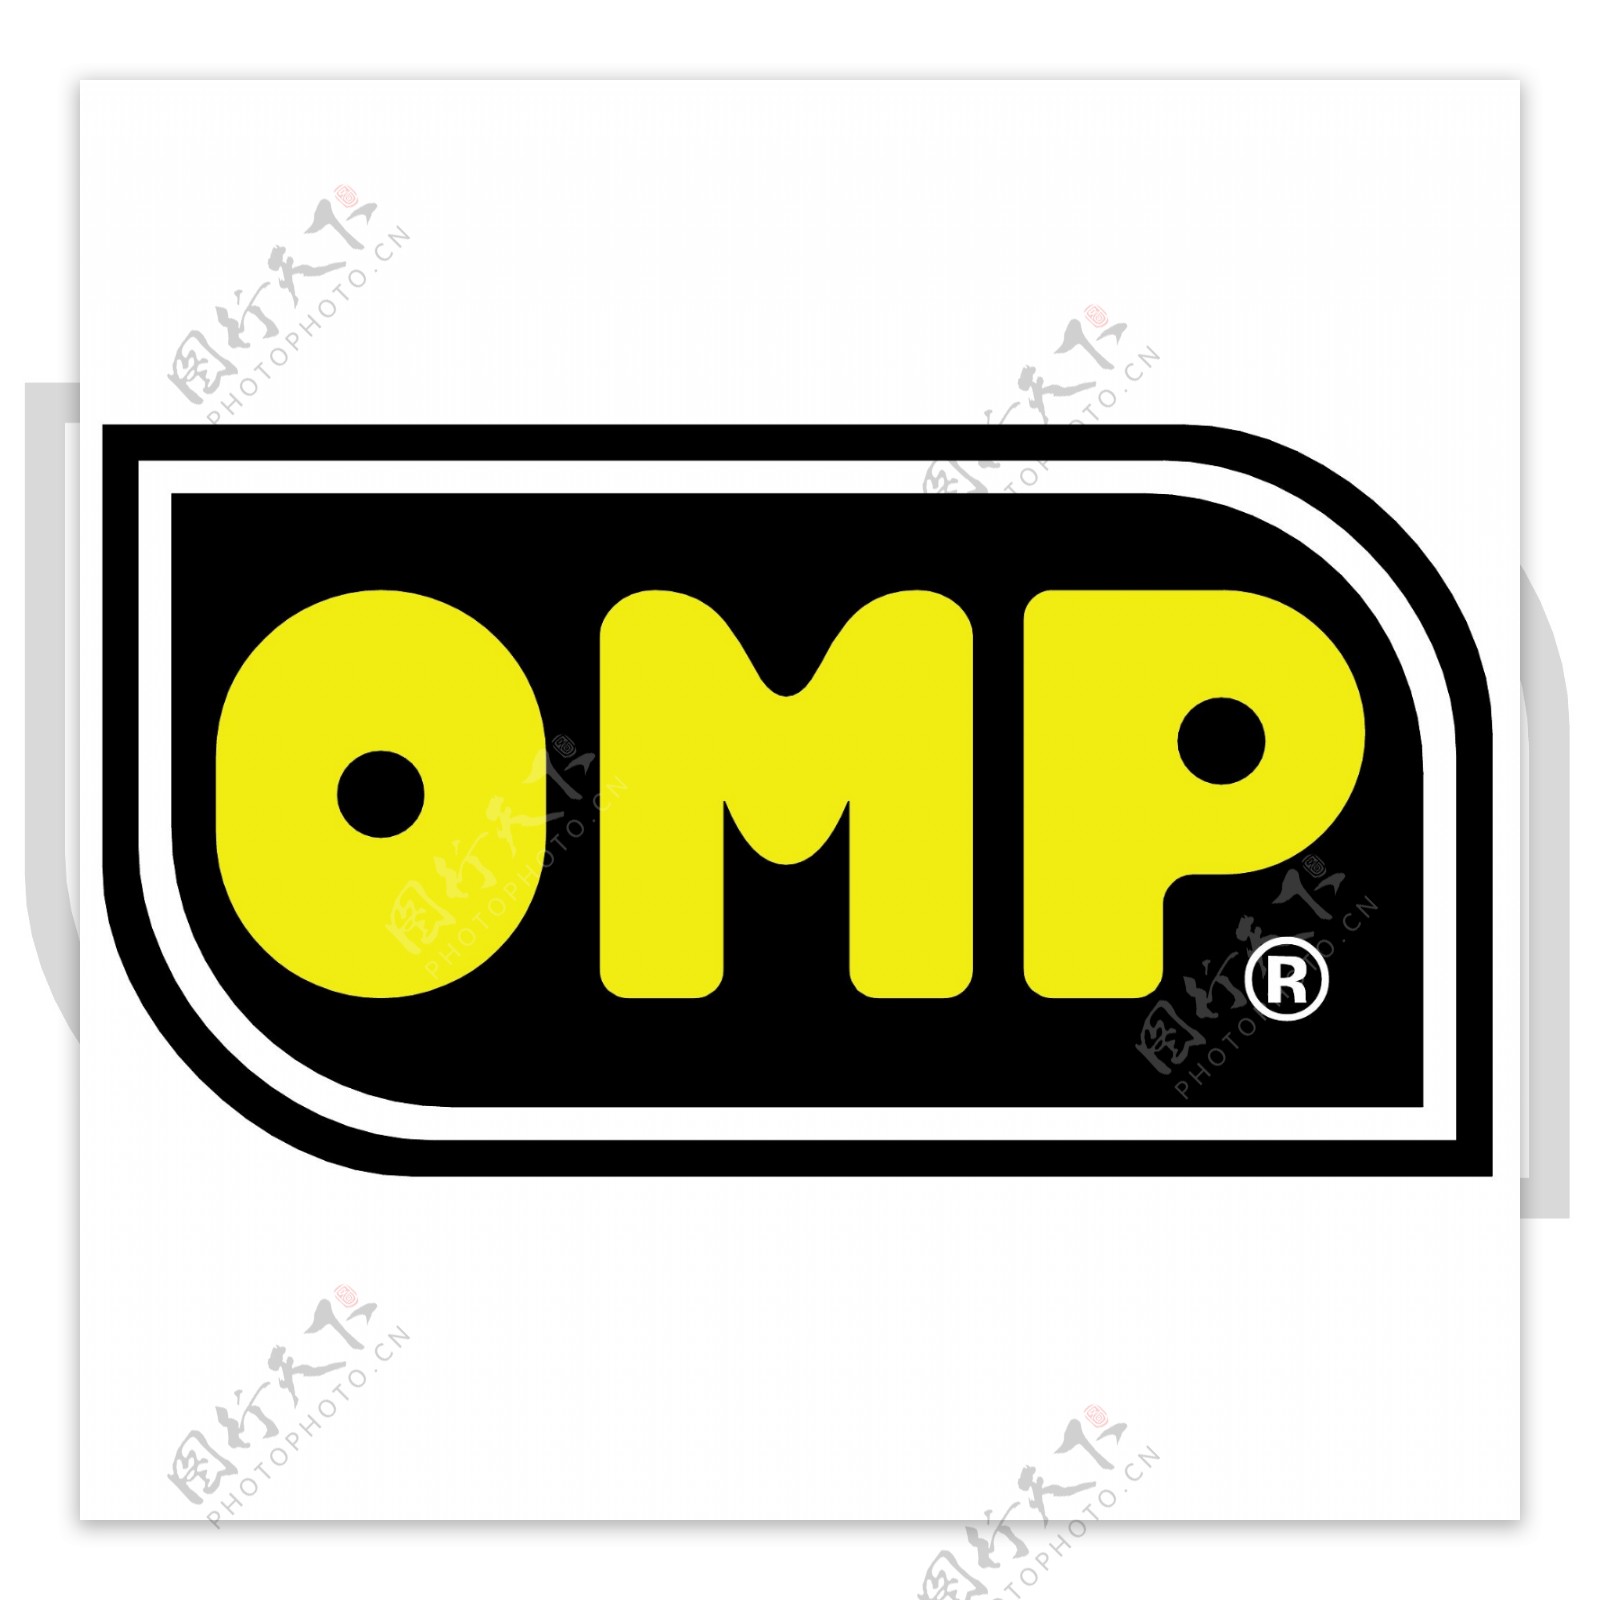 omp车贴图片